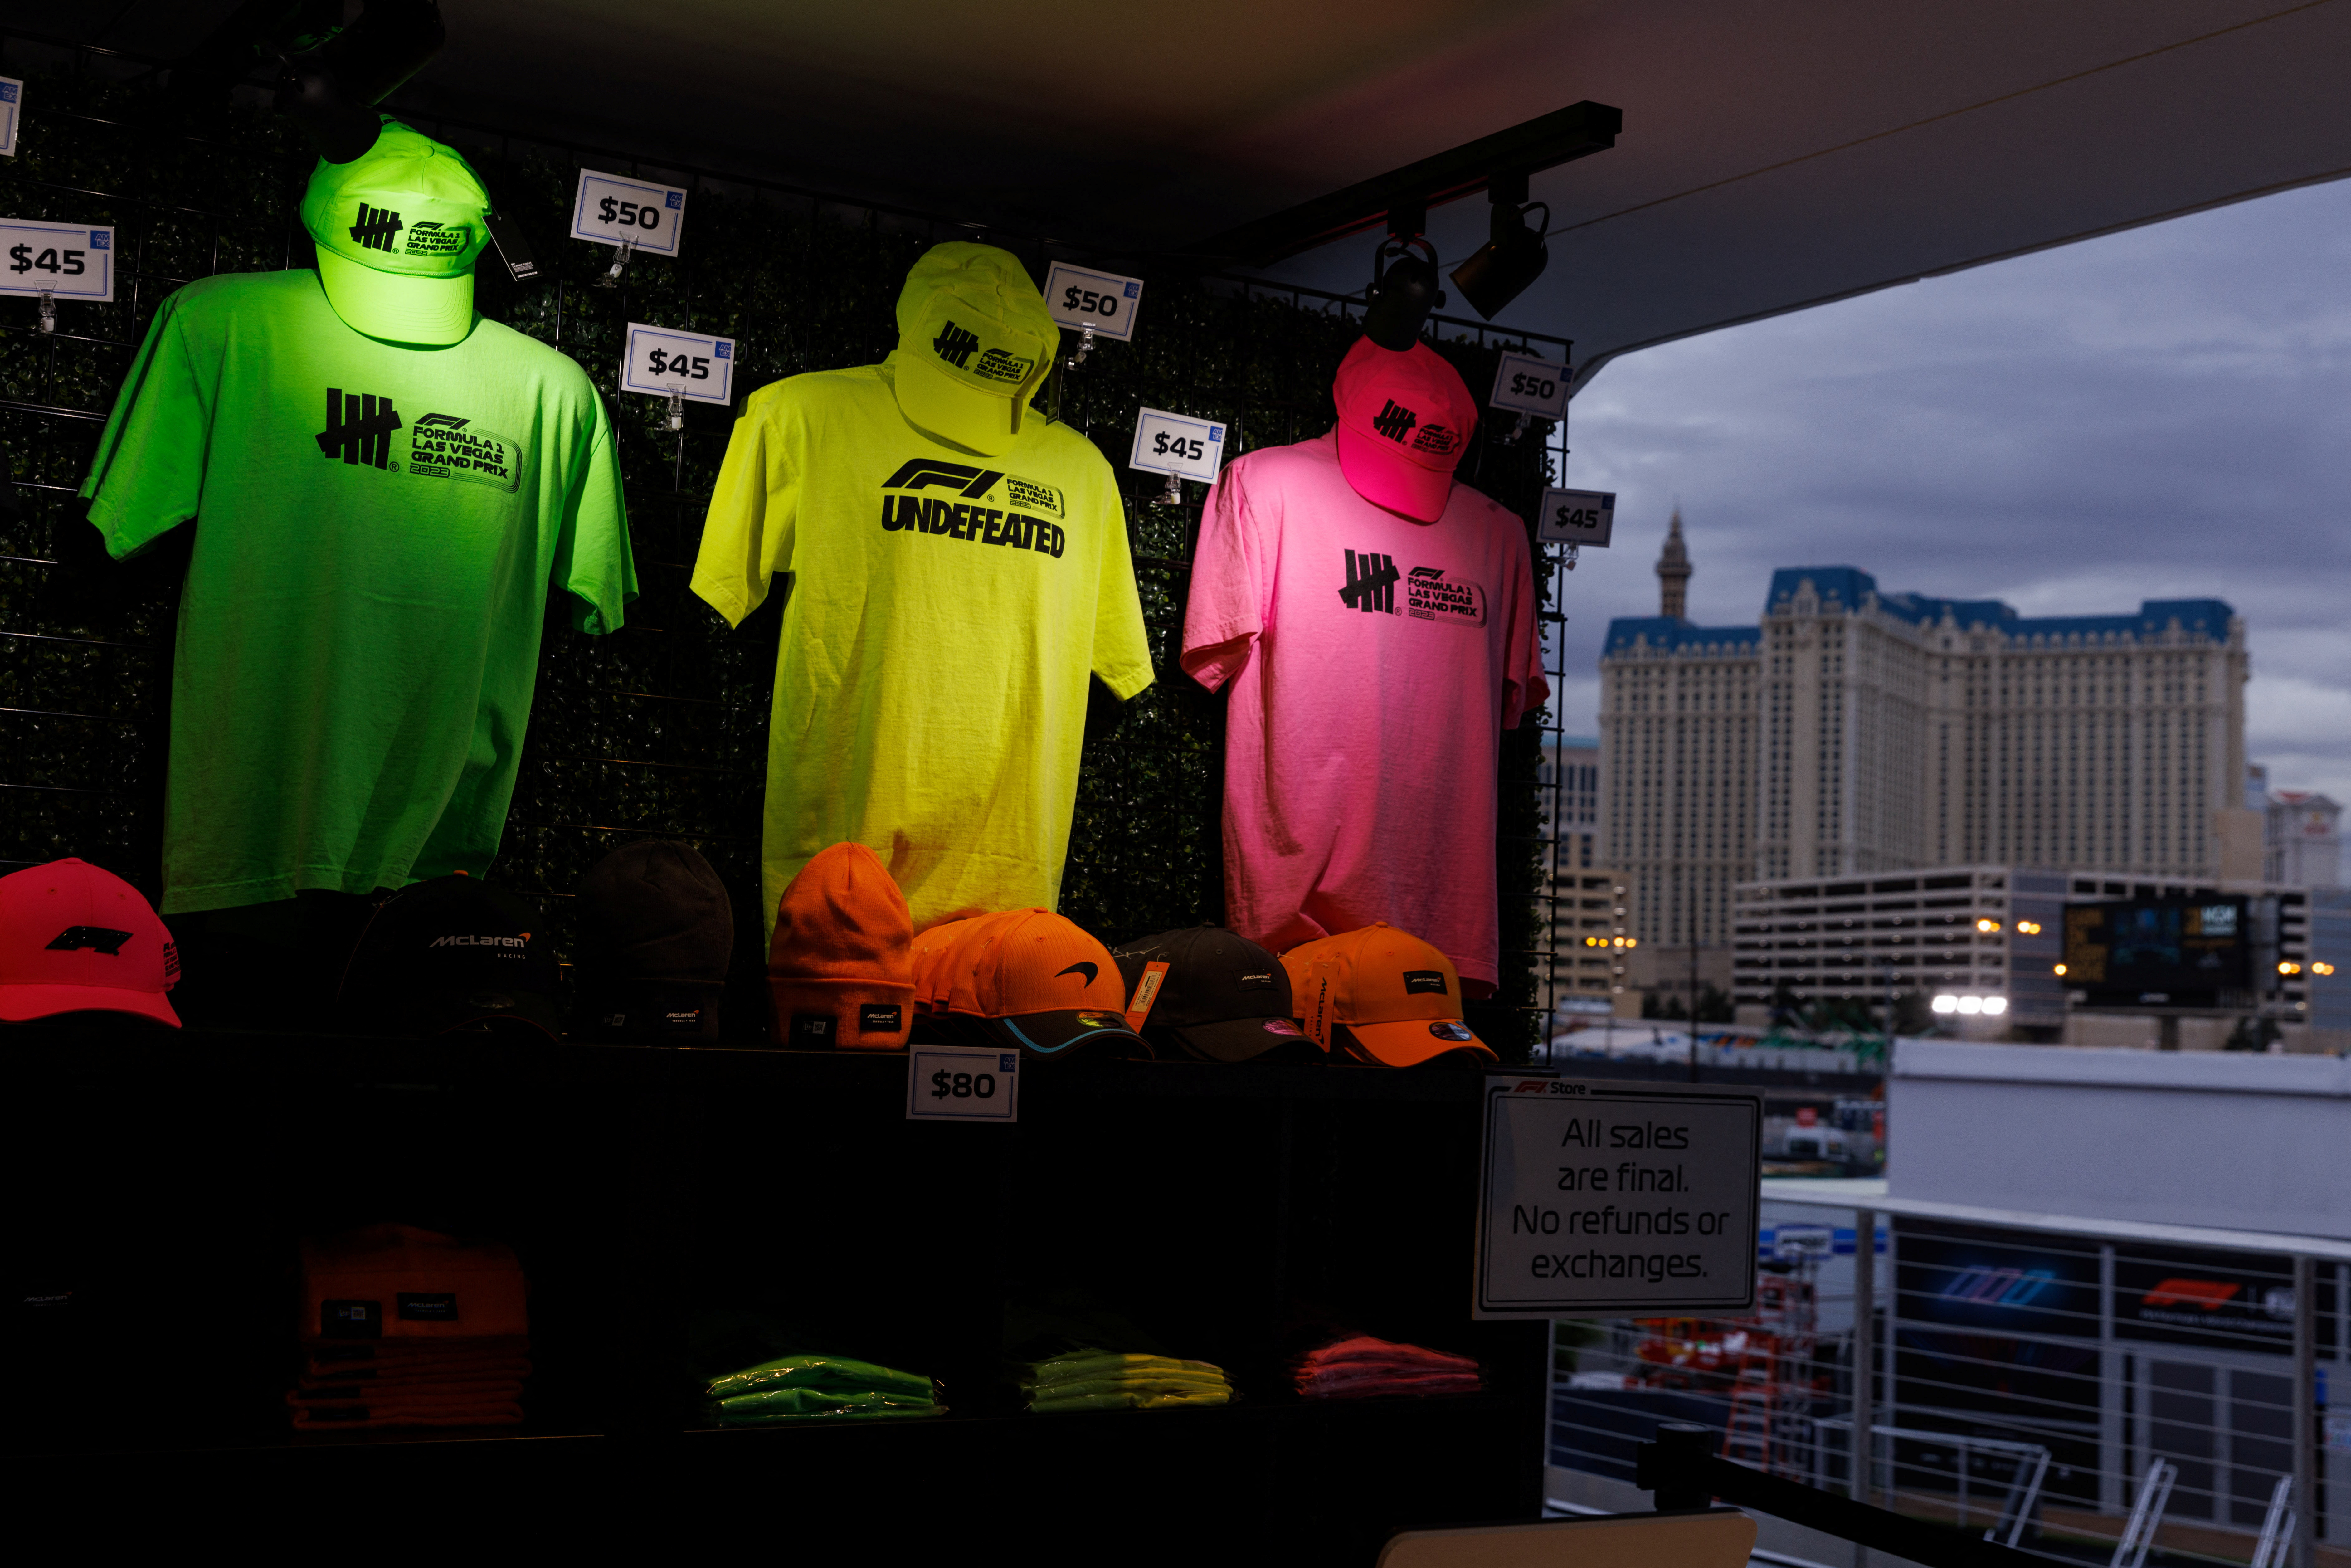 Formula One clothing craze sweeps retailers ahead of Vegas debut | Reuters